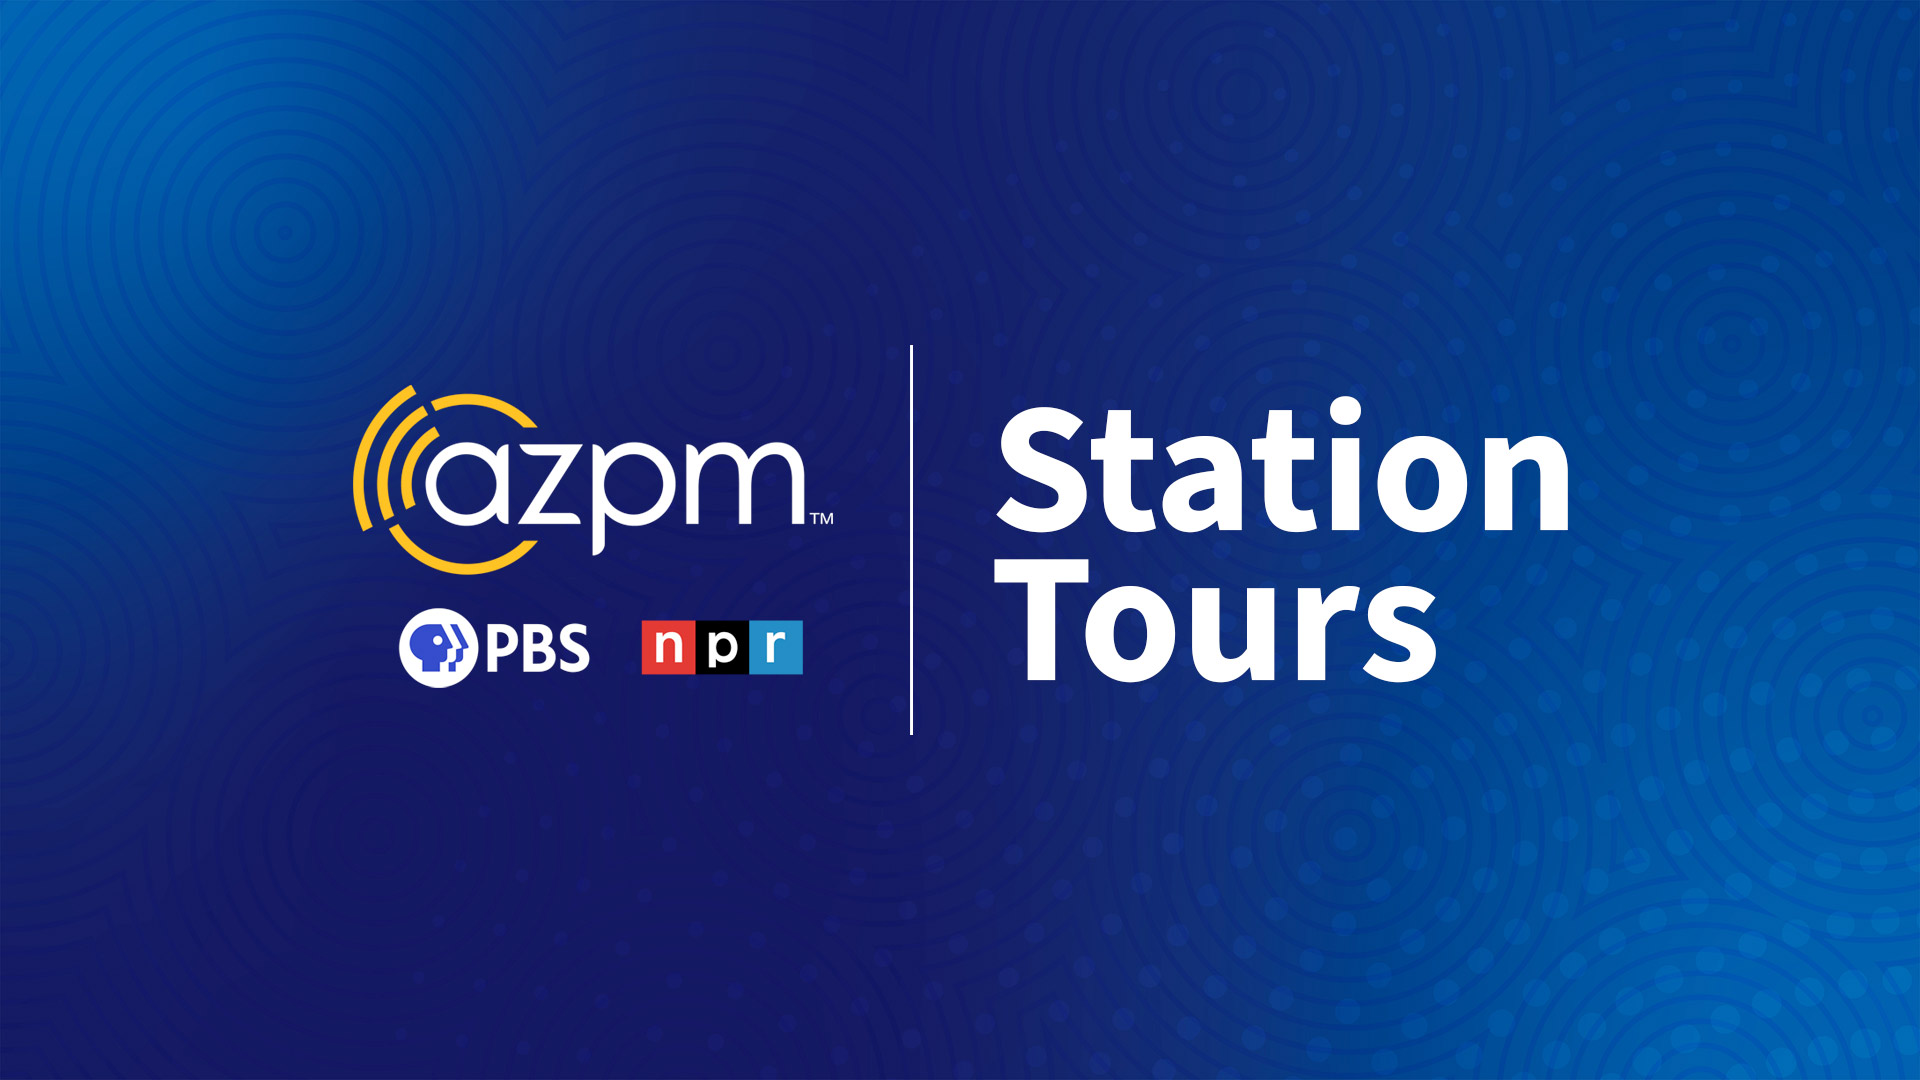 AZPM Station Tours